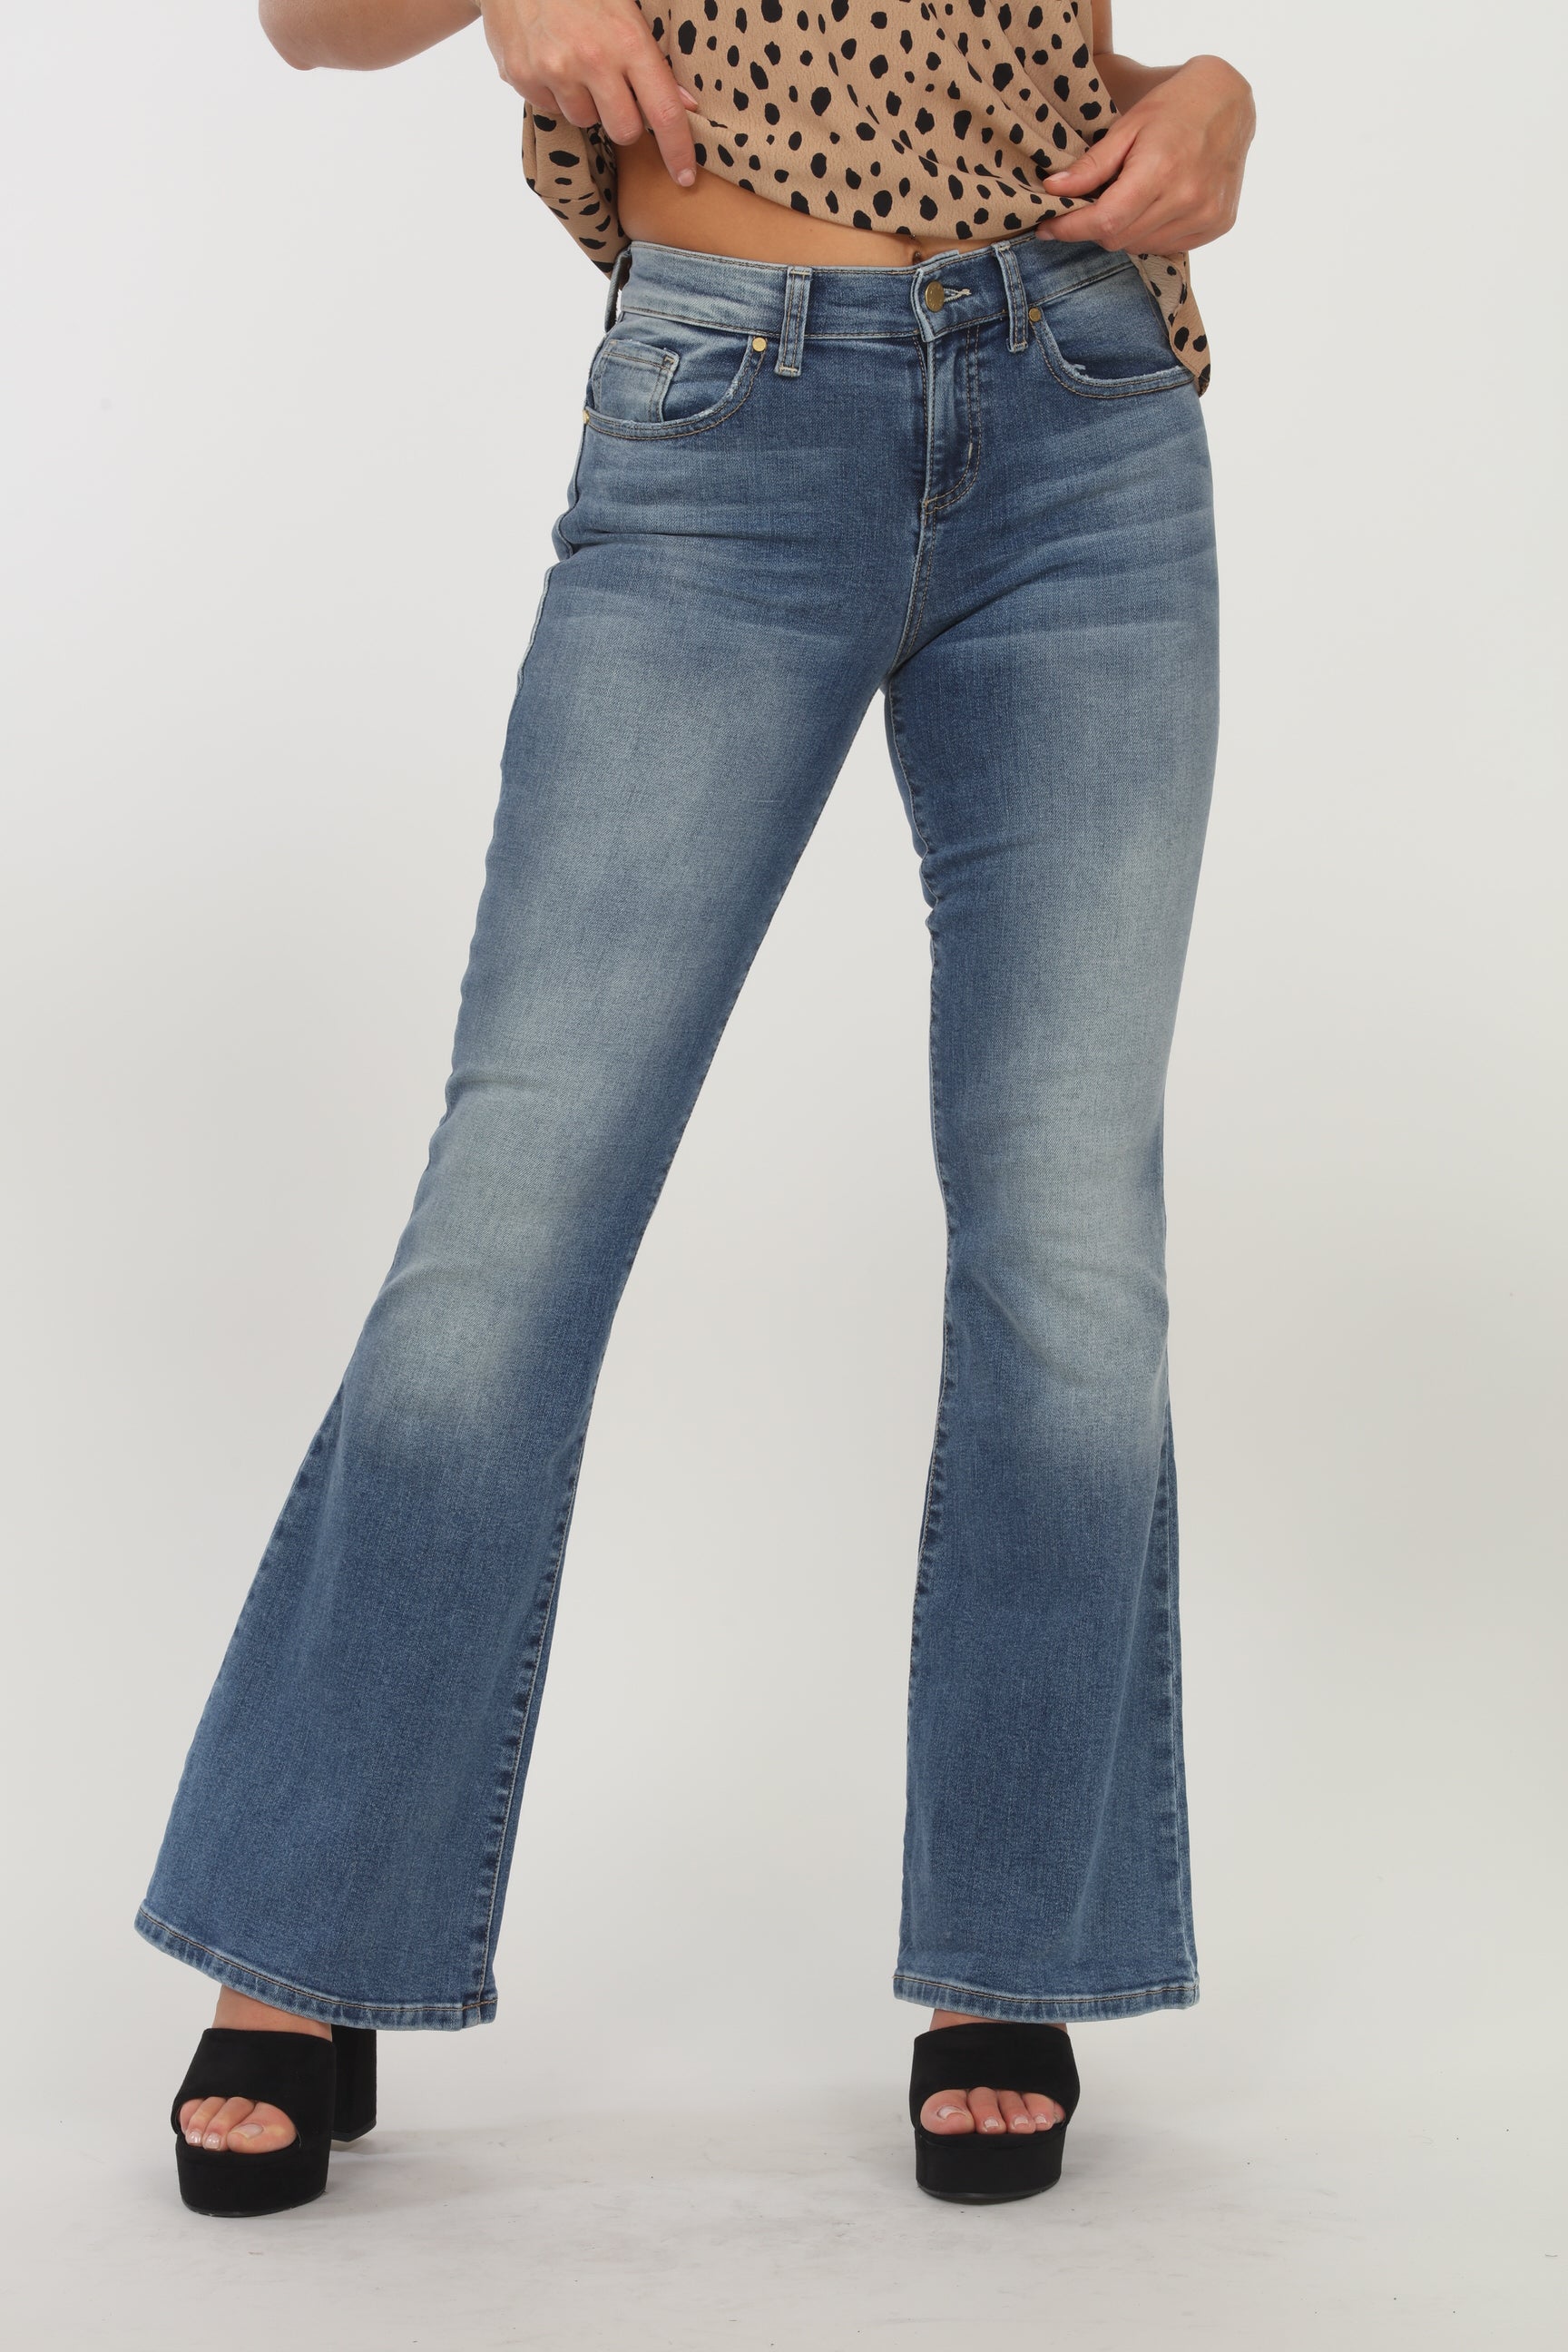 Level 99 Dahlia Mid Rise Flare Jeans - Medium Wash